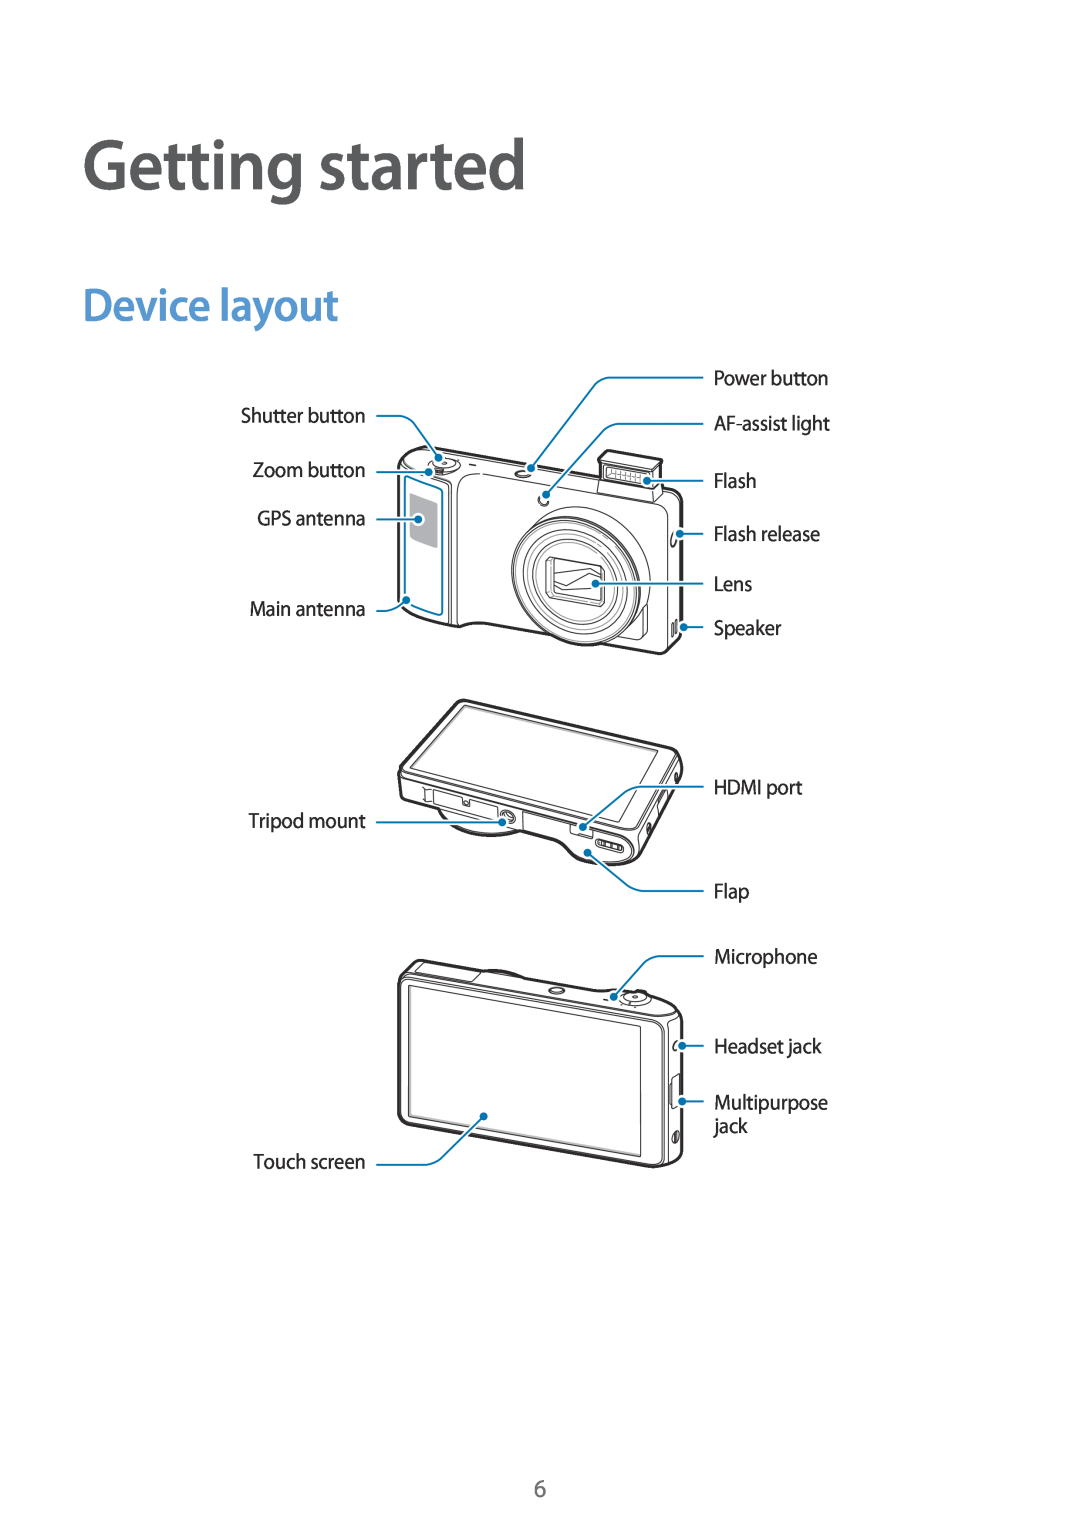 Samsung EK-GC100 Getting started, Device layout, Shutter button, Main antenna, Flash, Lens, Speaker, Touch screen 